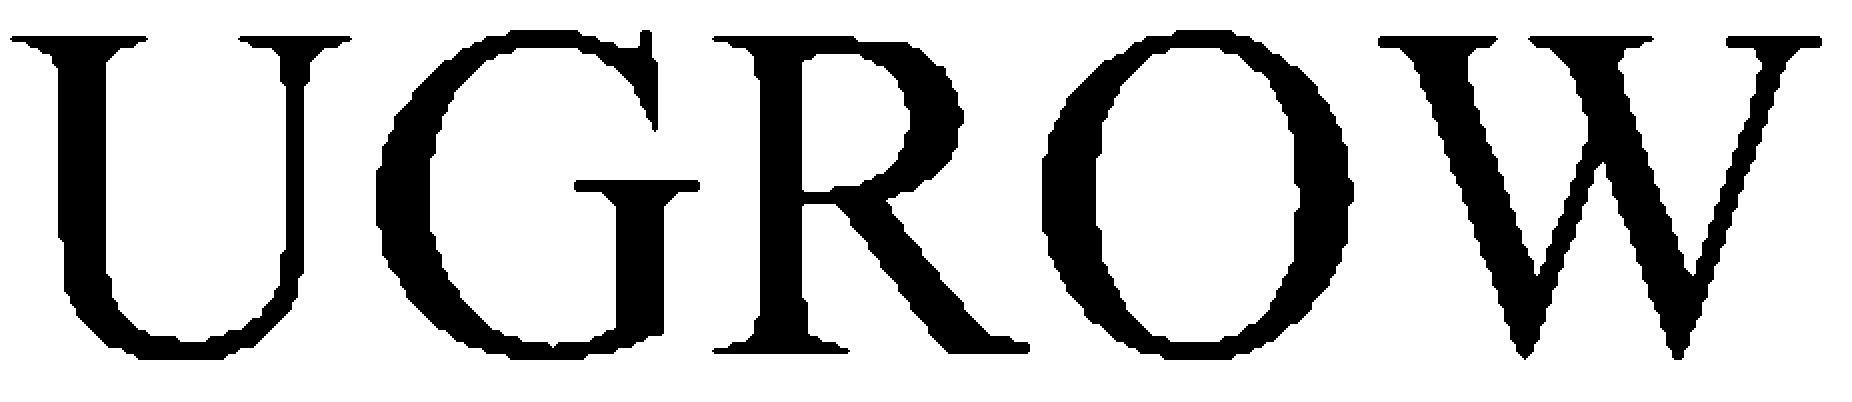 Trademark Logo UGROW